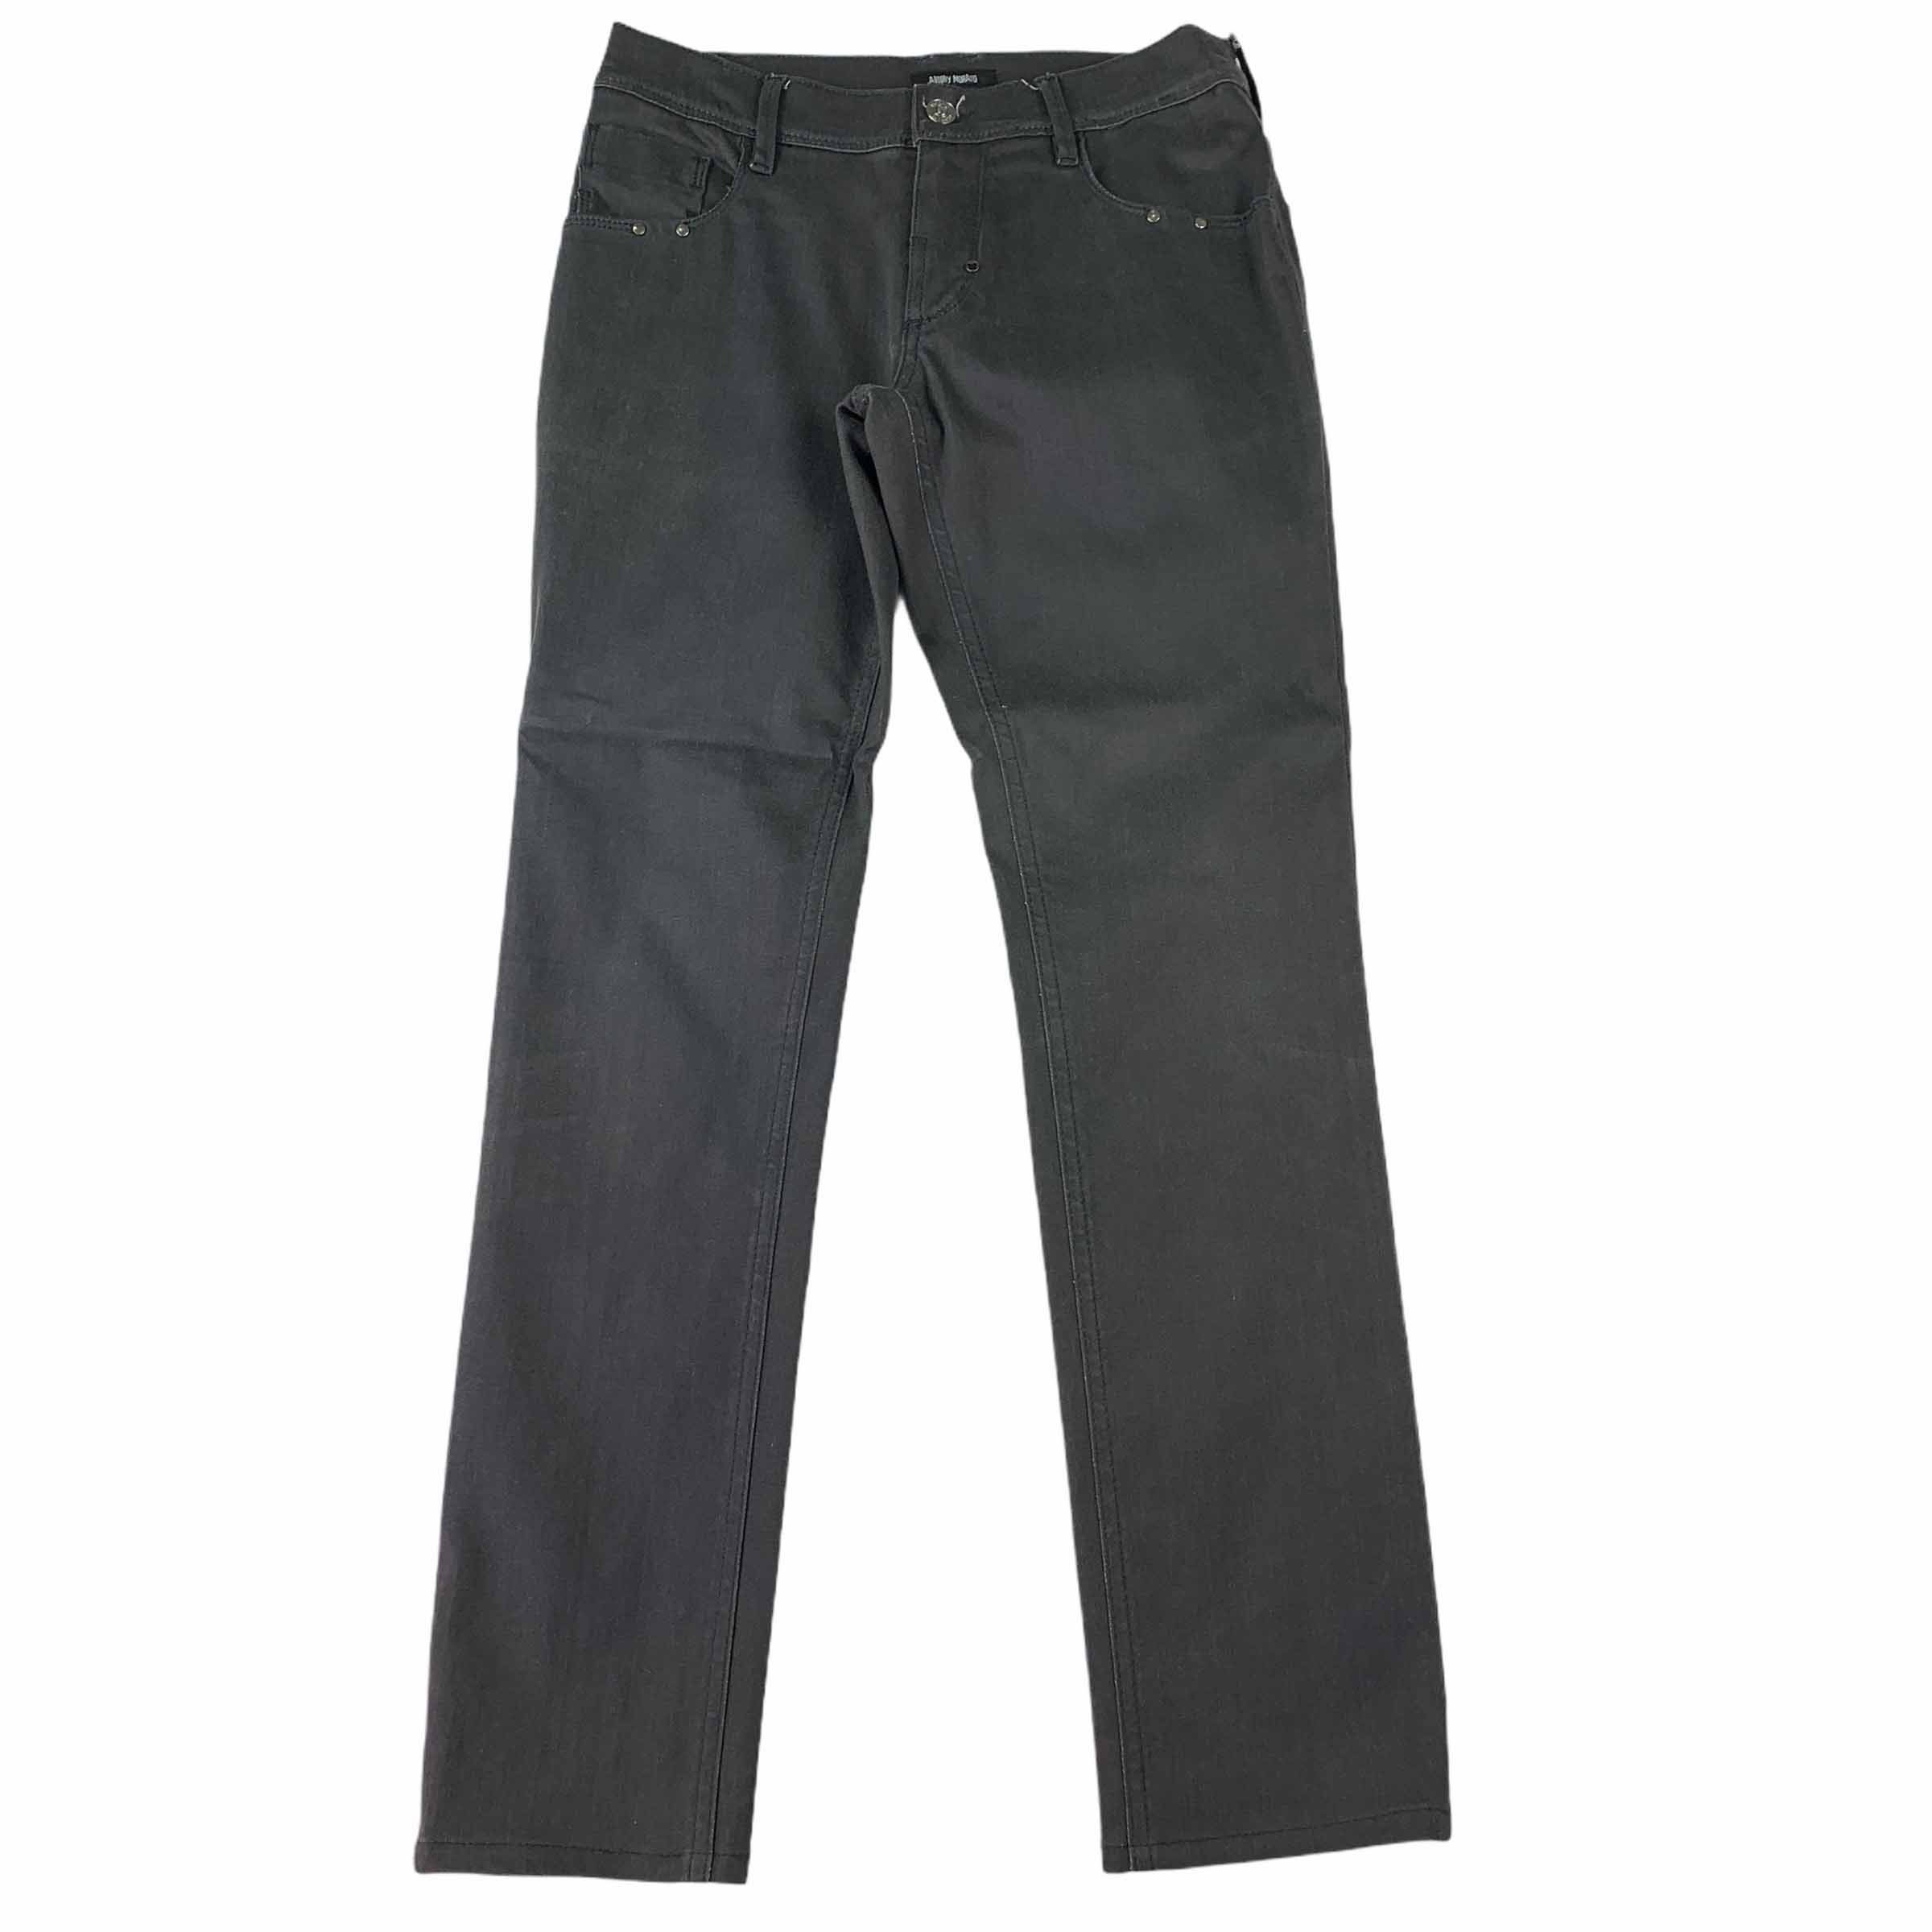 [Antony Morato] Skinny Fit Warm Gray Jeans - Size 44